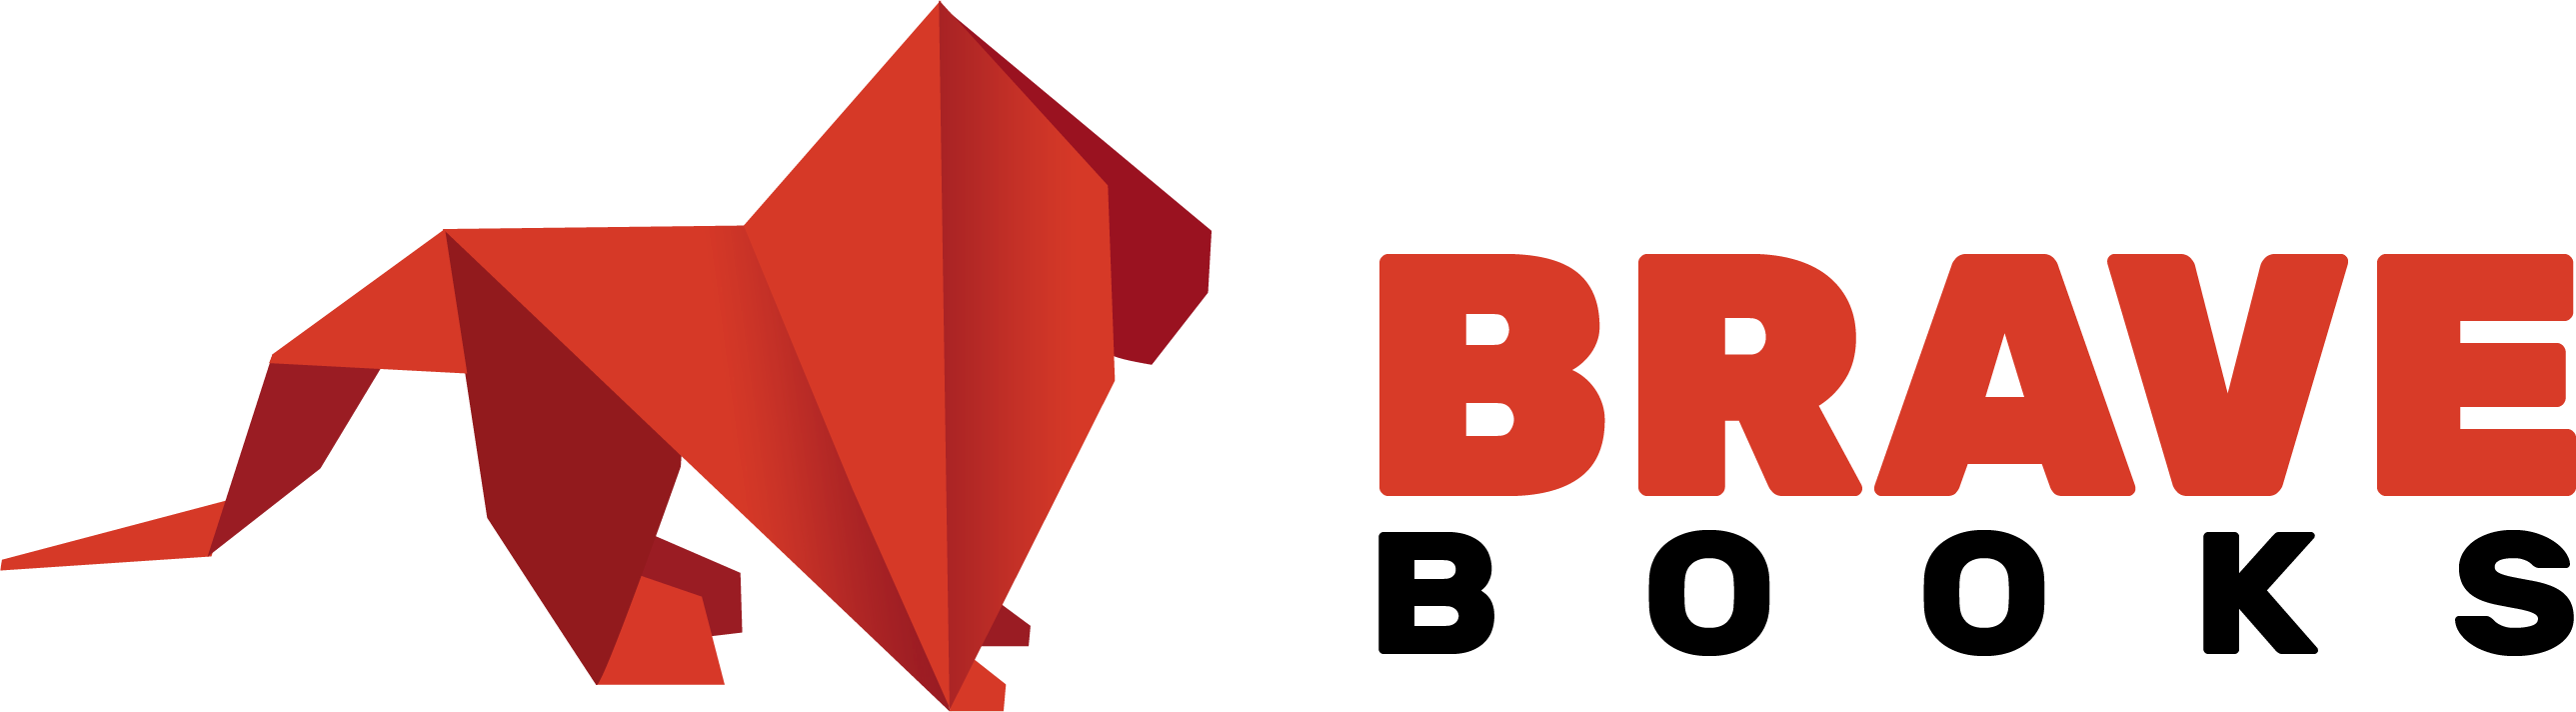 BRAVE Books logo